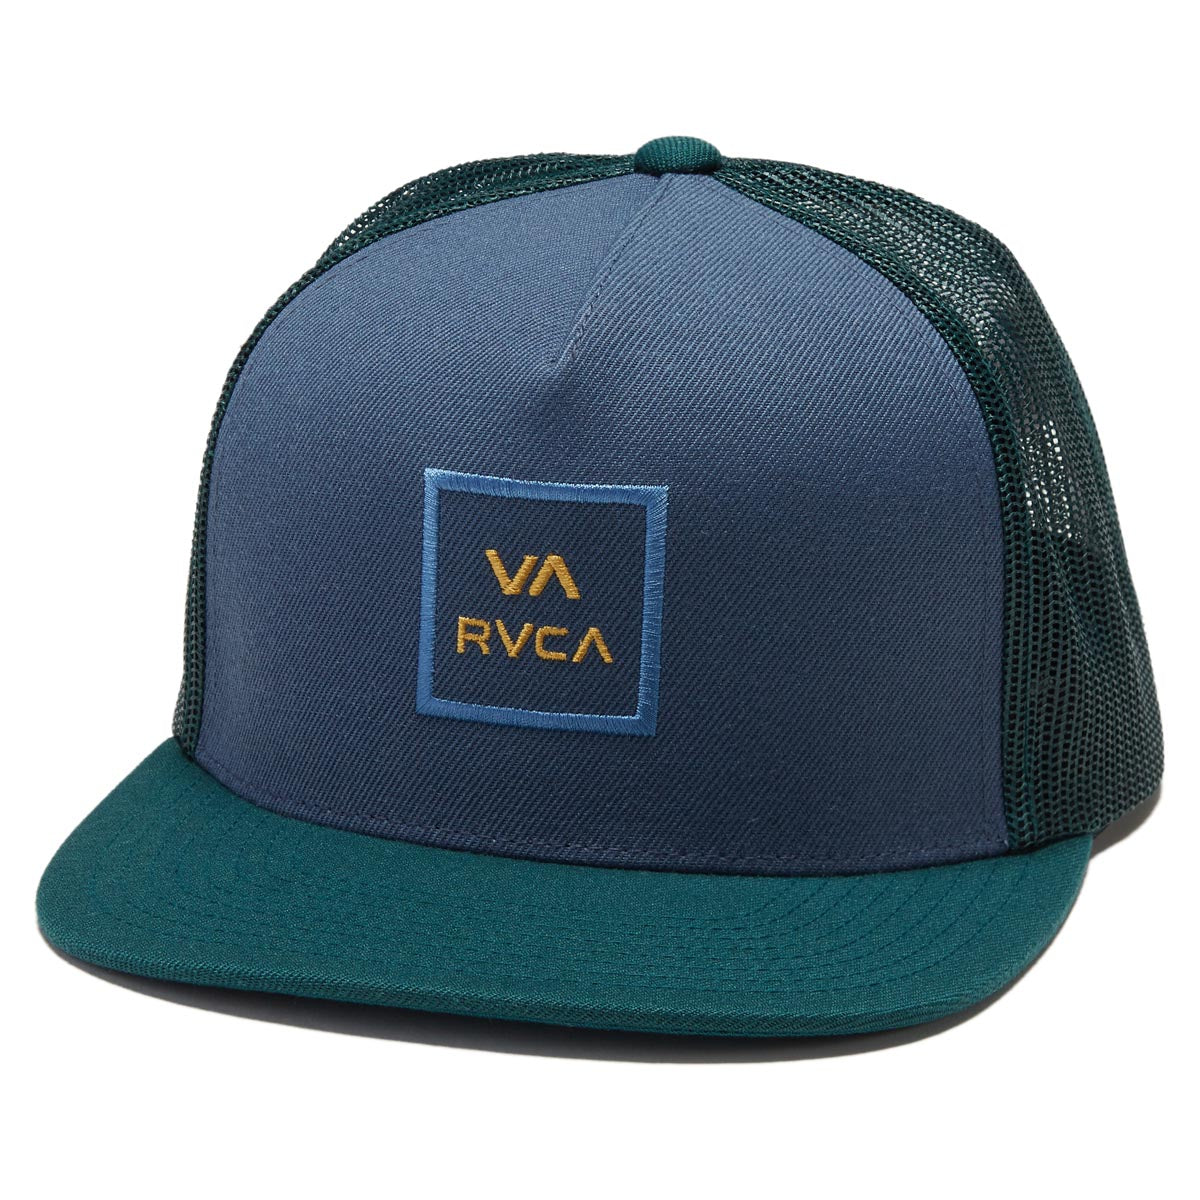 RVCA Va All The Way Trucker Hat - Teal image 1